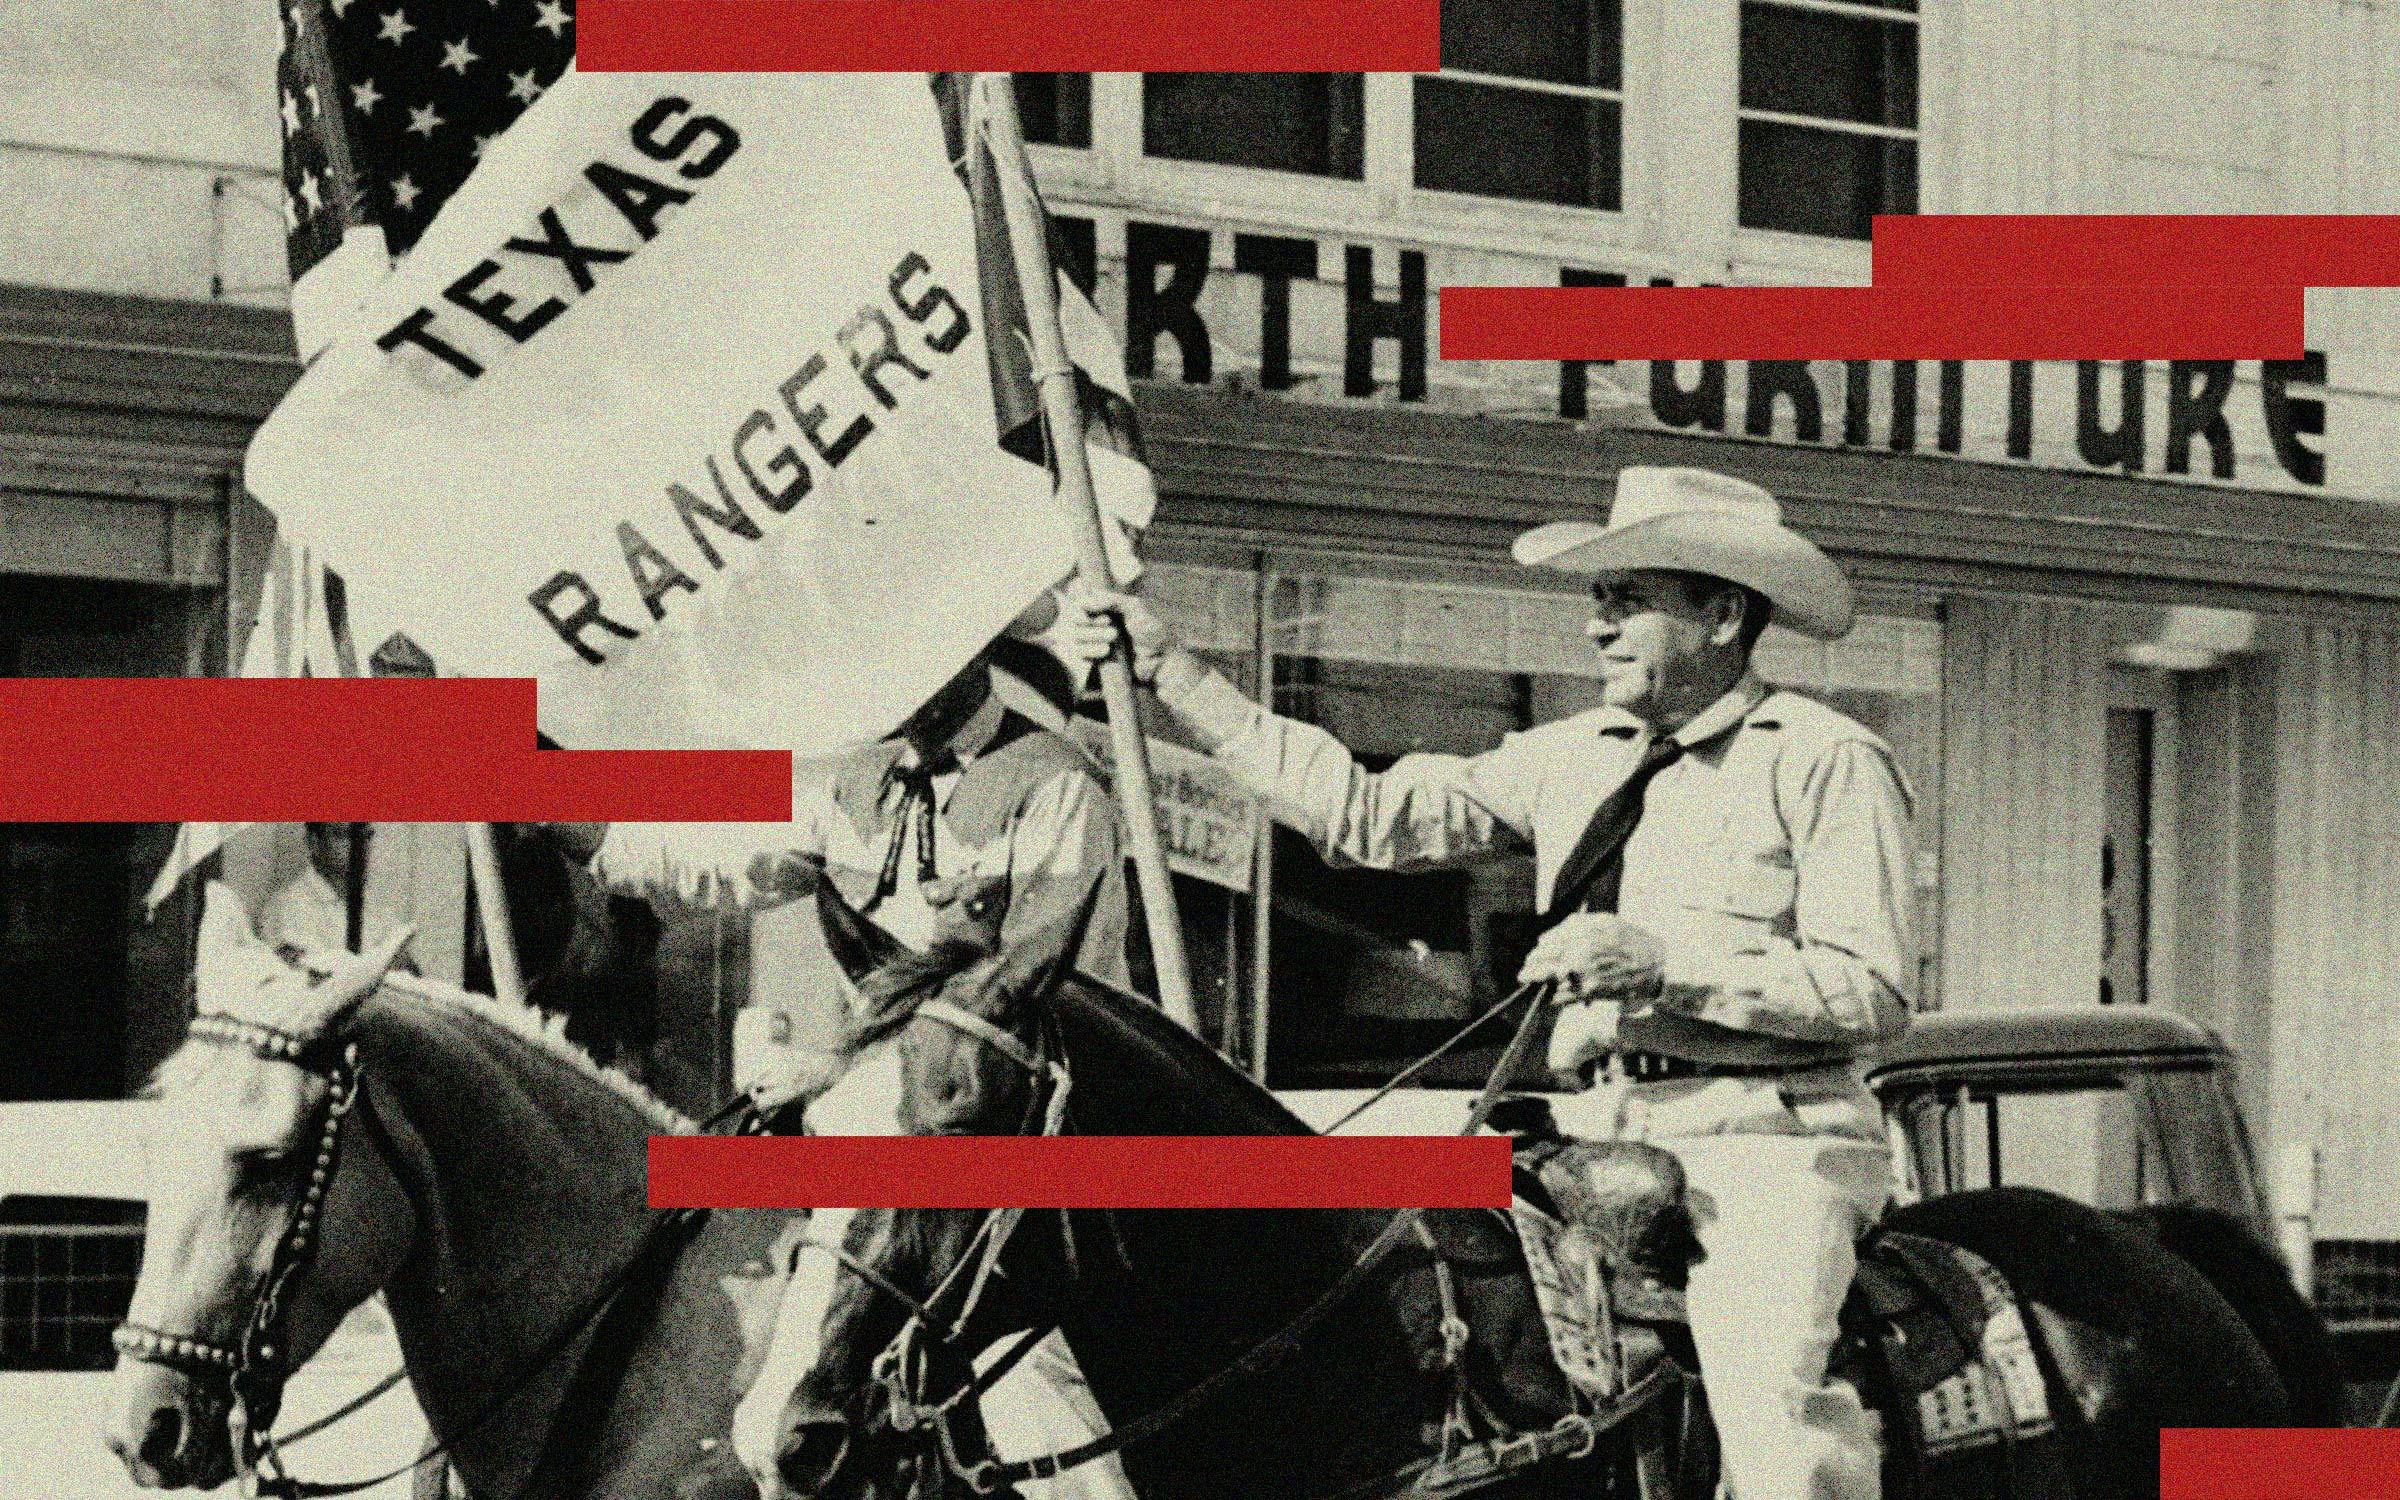 More about The Texas Rangers - Texas Ranger Law Enforcement